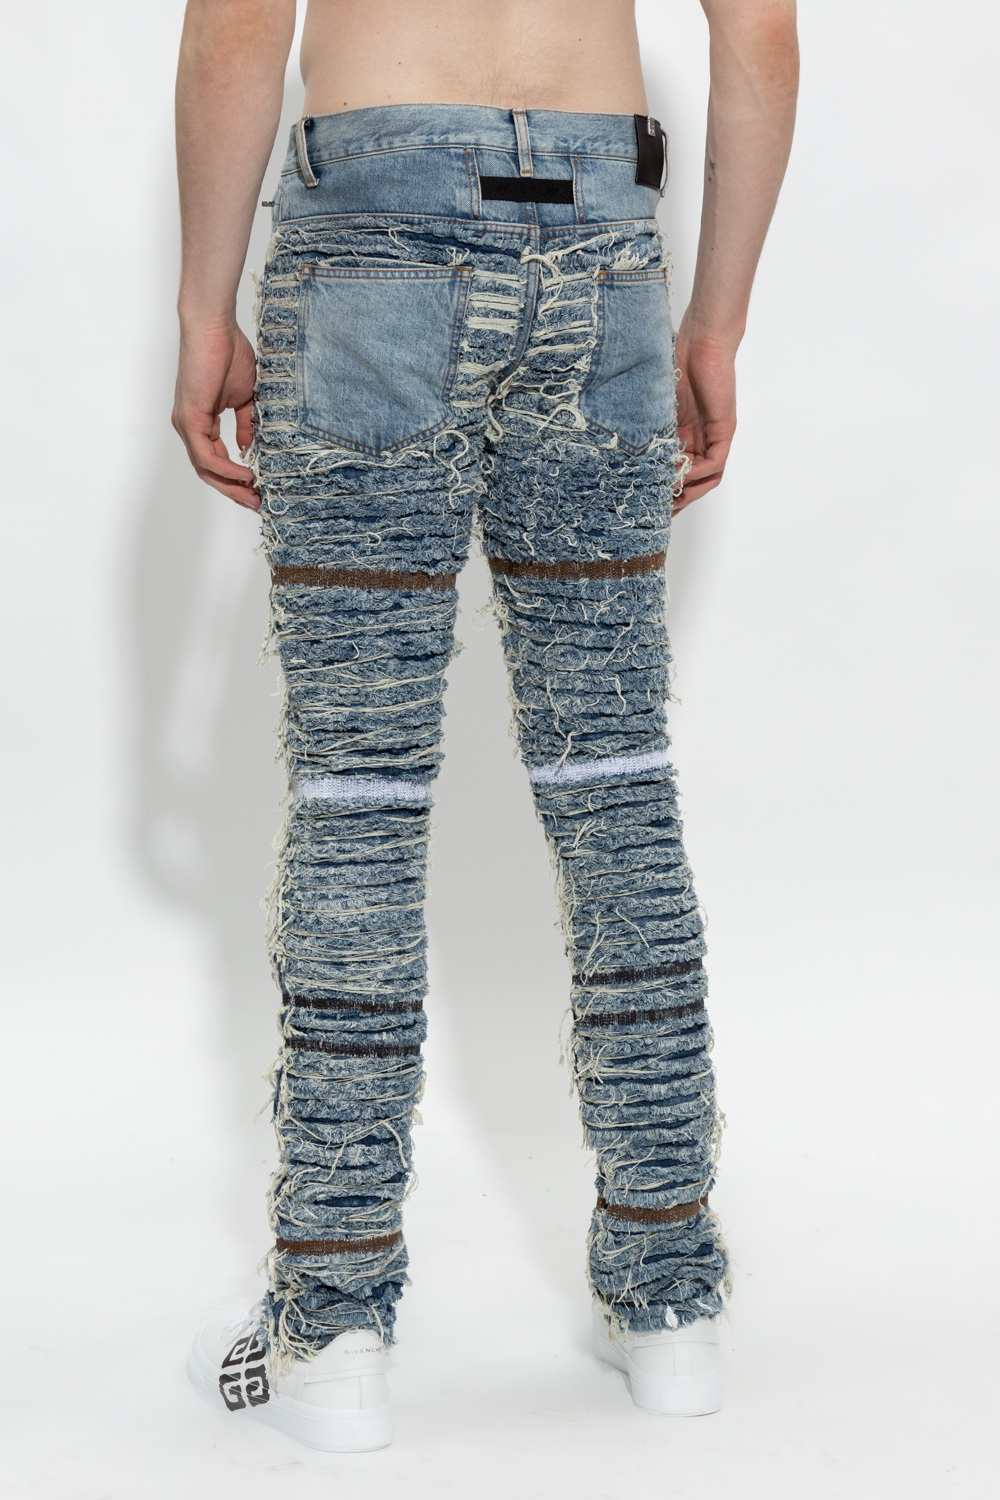 alyx blackmeans jeans パンツ - パンツ